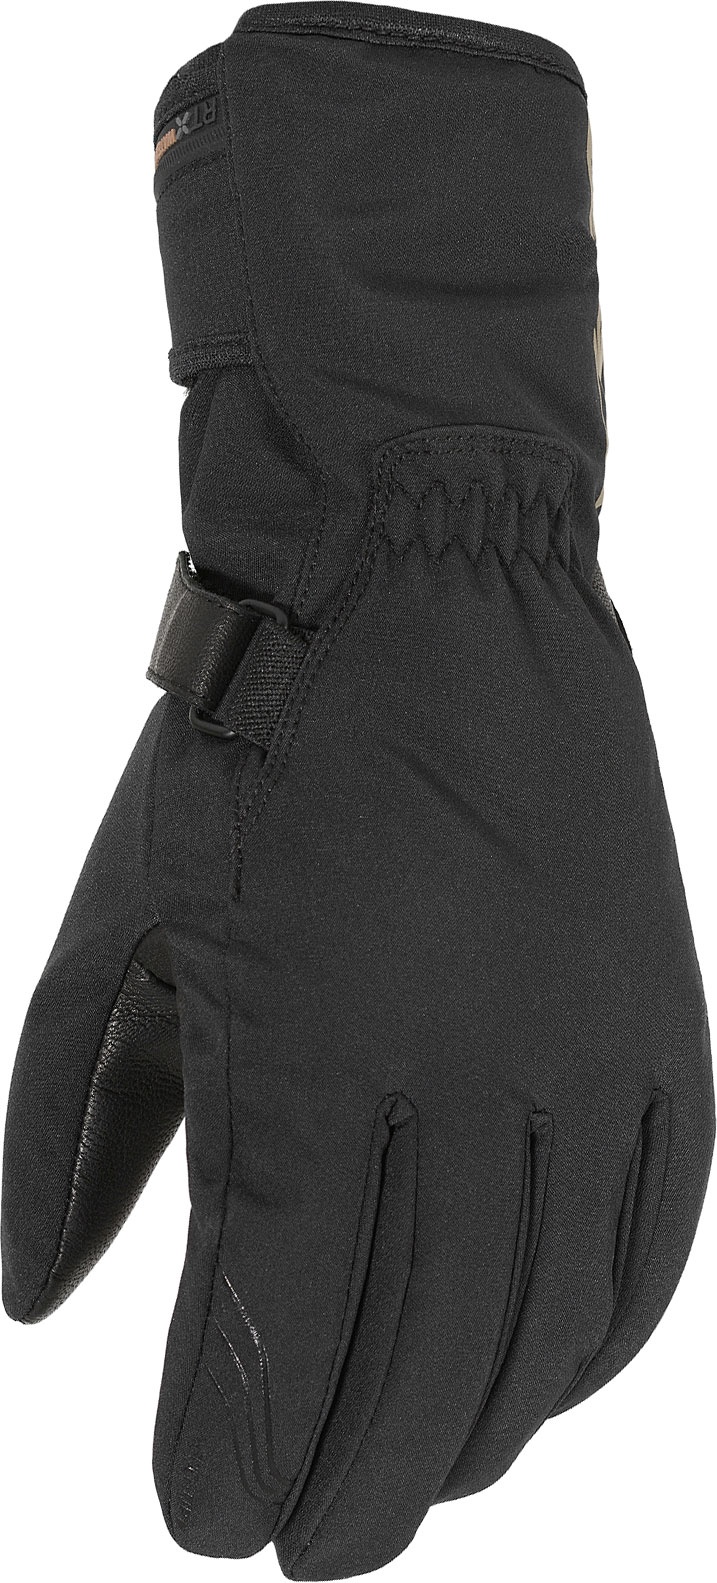 Macna Tigo RTX Evo, gants imperméables pour femmes - Noir - XS